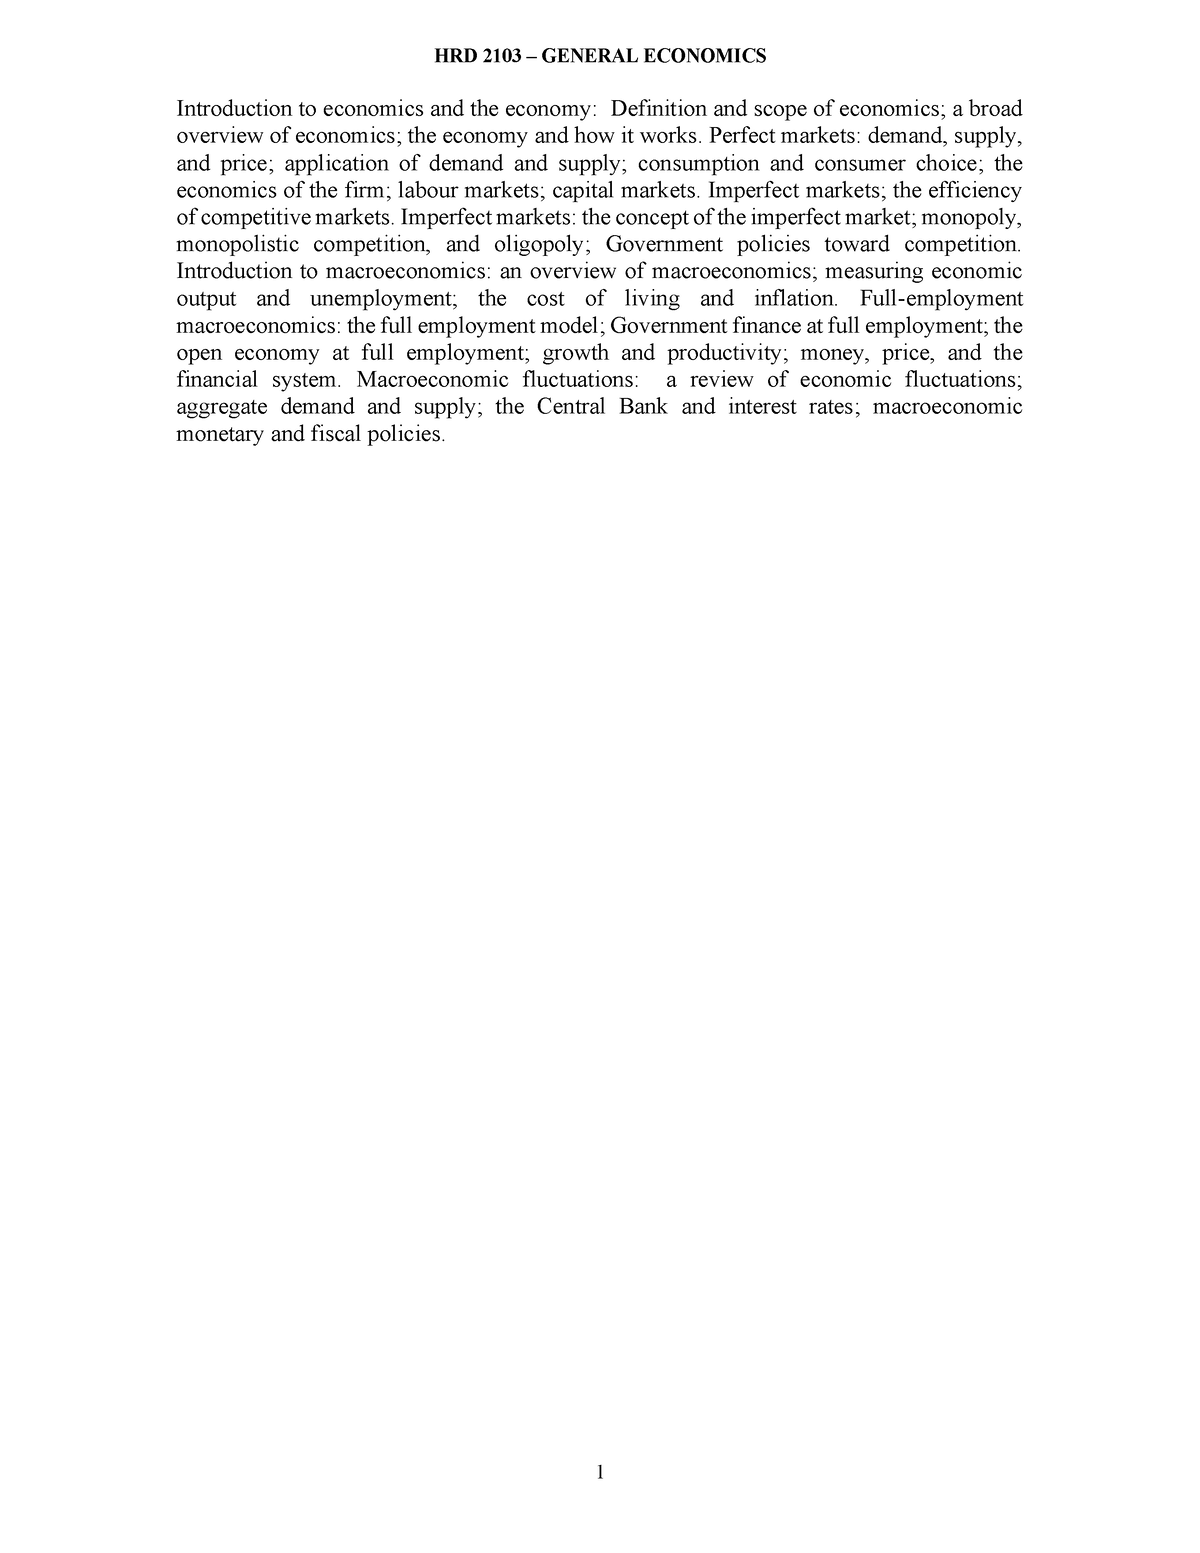 HRD 2103 Notes JKUAT - HRD 2103 – GENERAL ECONOMICS Introduction to ...